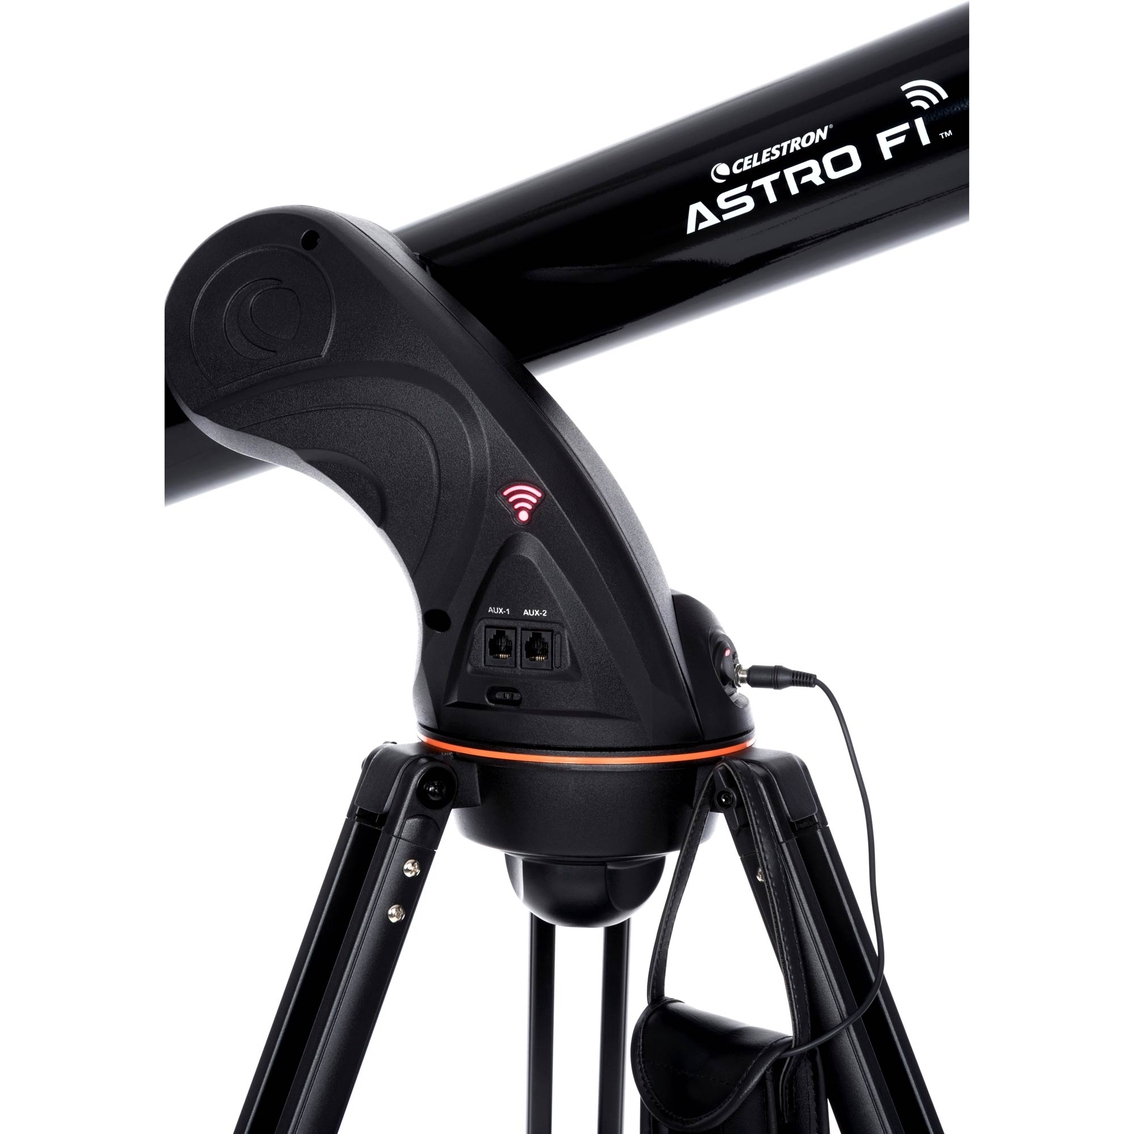 Celestron Astro Fi 90mm Refractor Telescope - Image 2 of 4